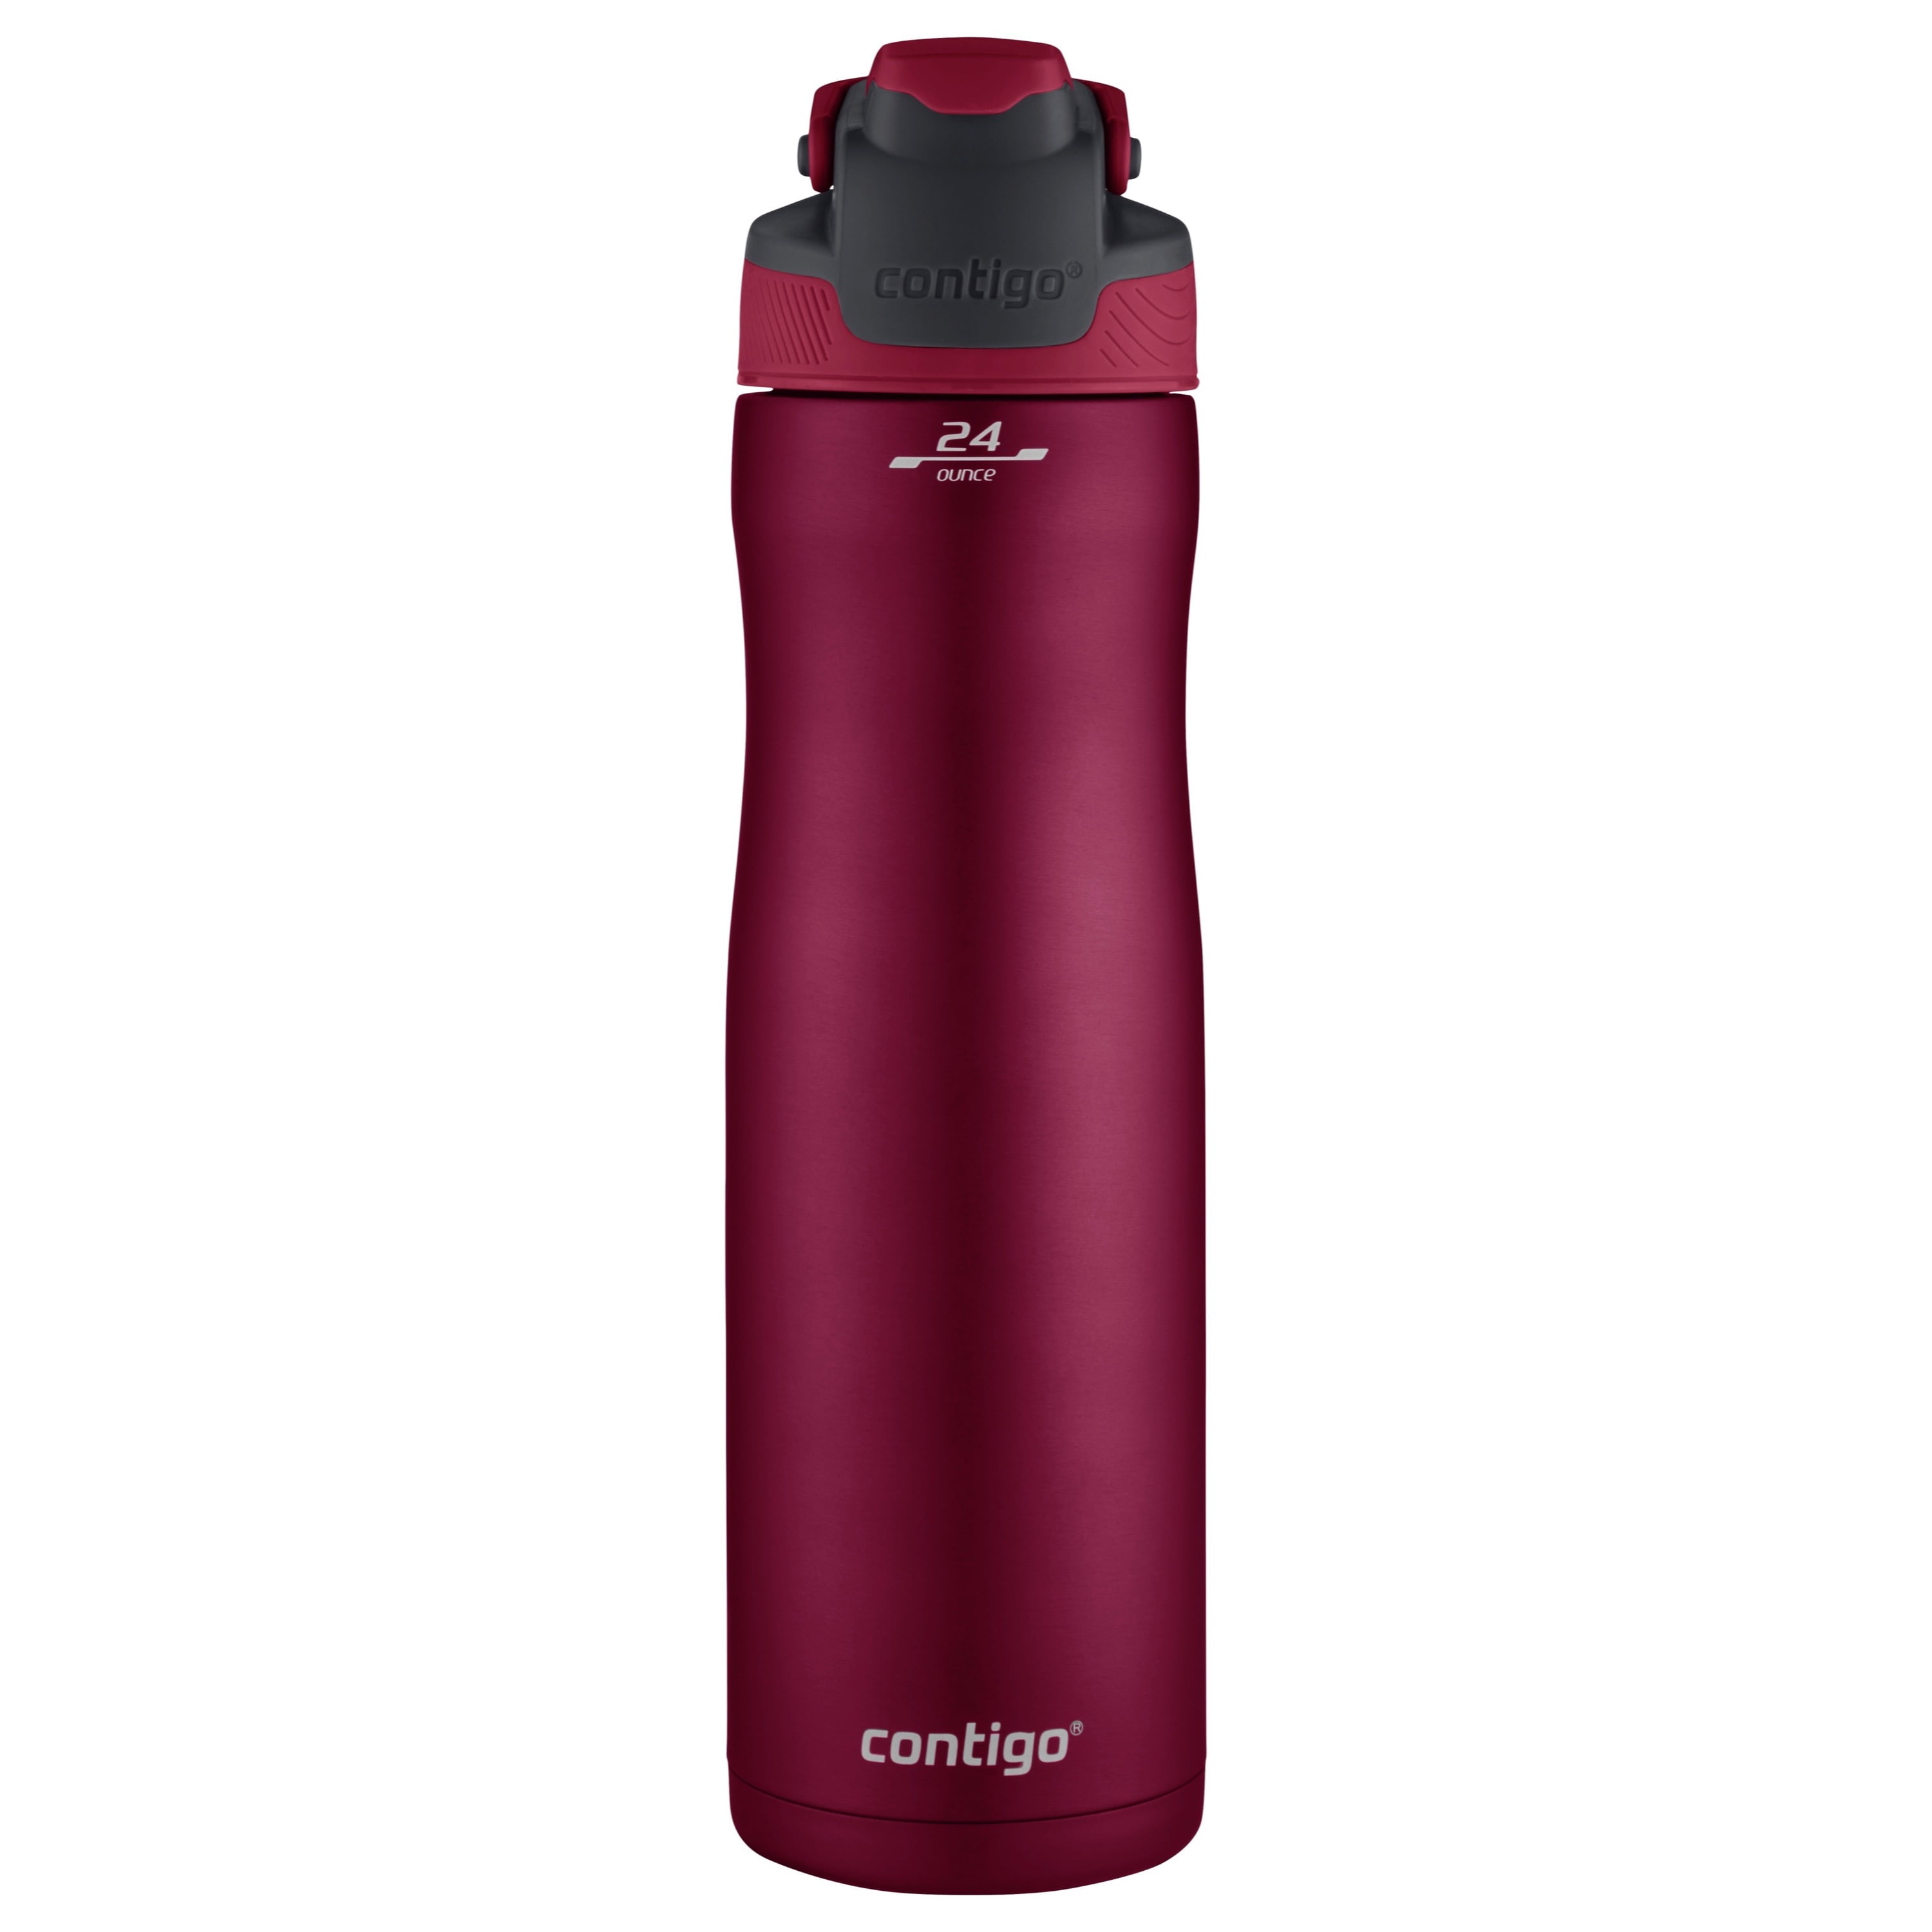 2x Contigo S/Steel Chill Cold Shaker Bottles 24 oz Vacuum Insulated Travel Flask 